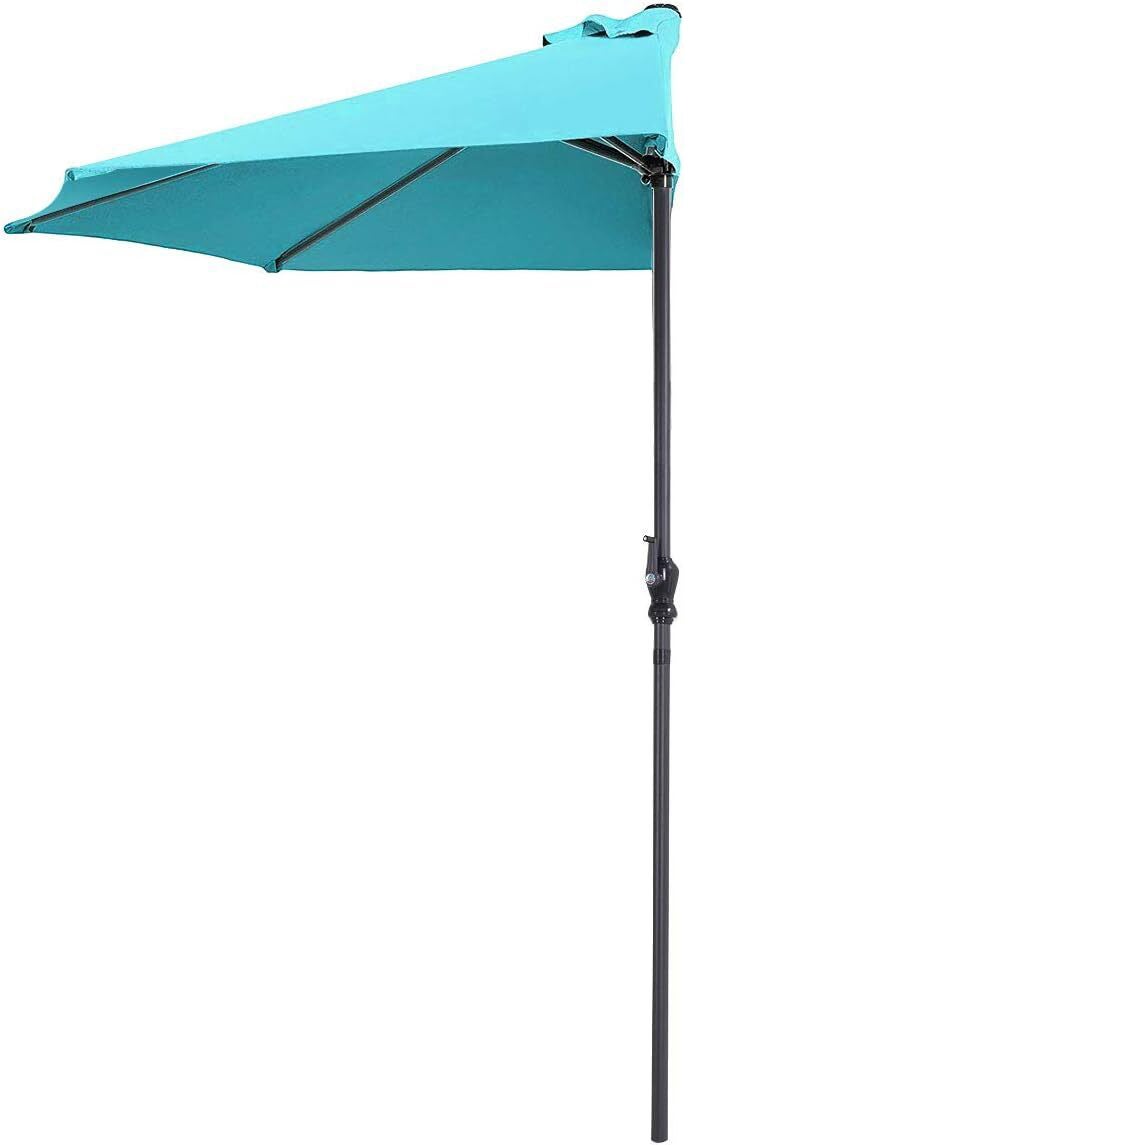 Tangkula 9 ft Half Round Outdoor Patio Umbrella in turquoise